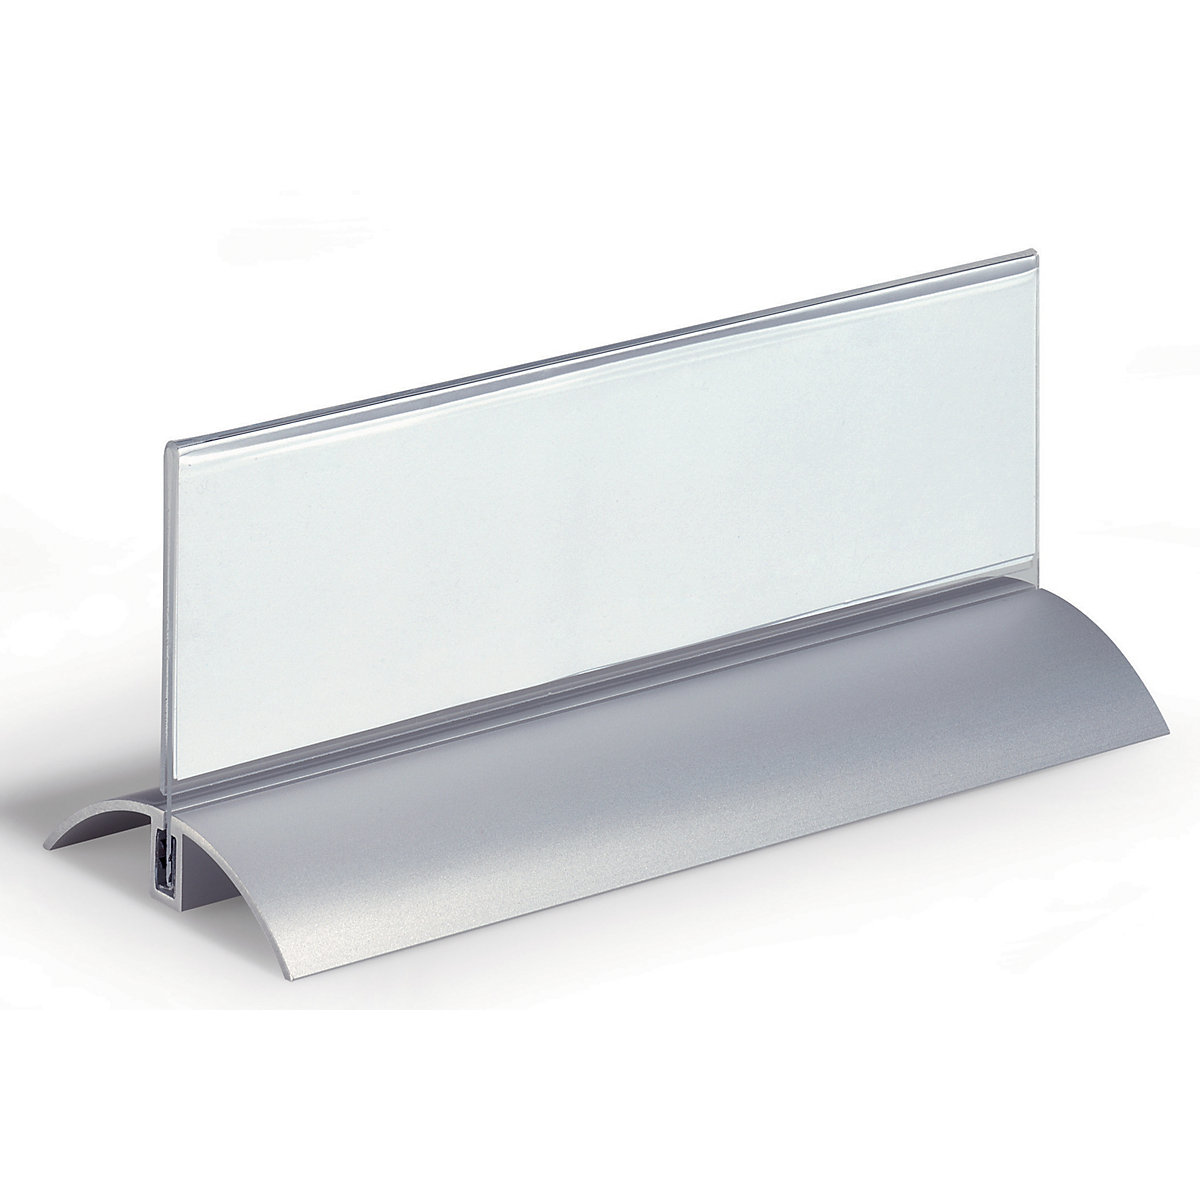 Table place name holder, acrylic, with aluminium base – DURABLE